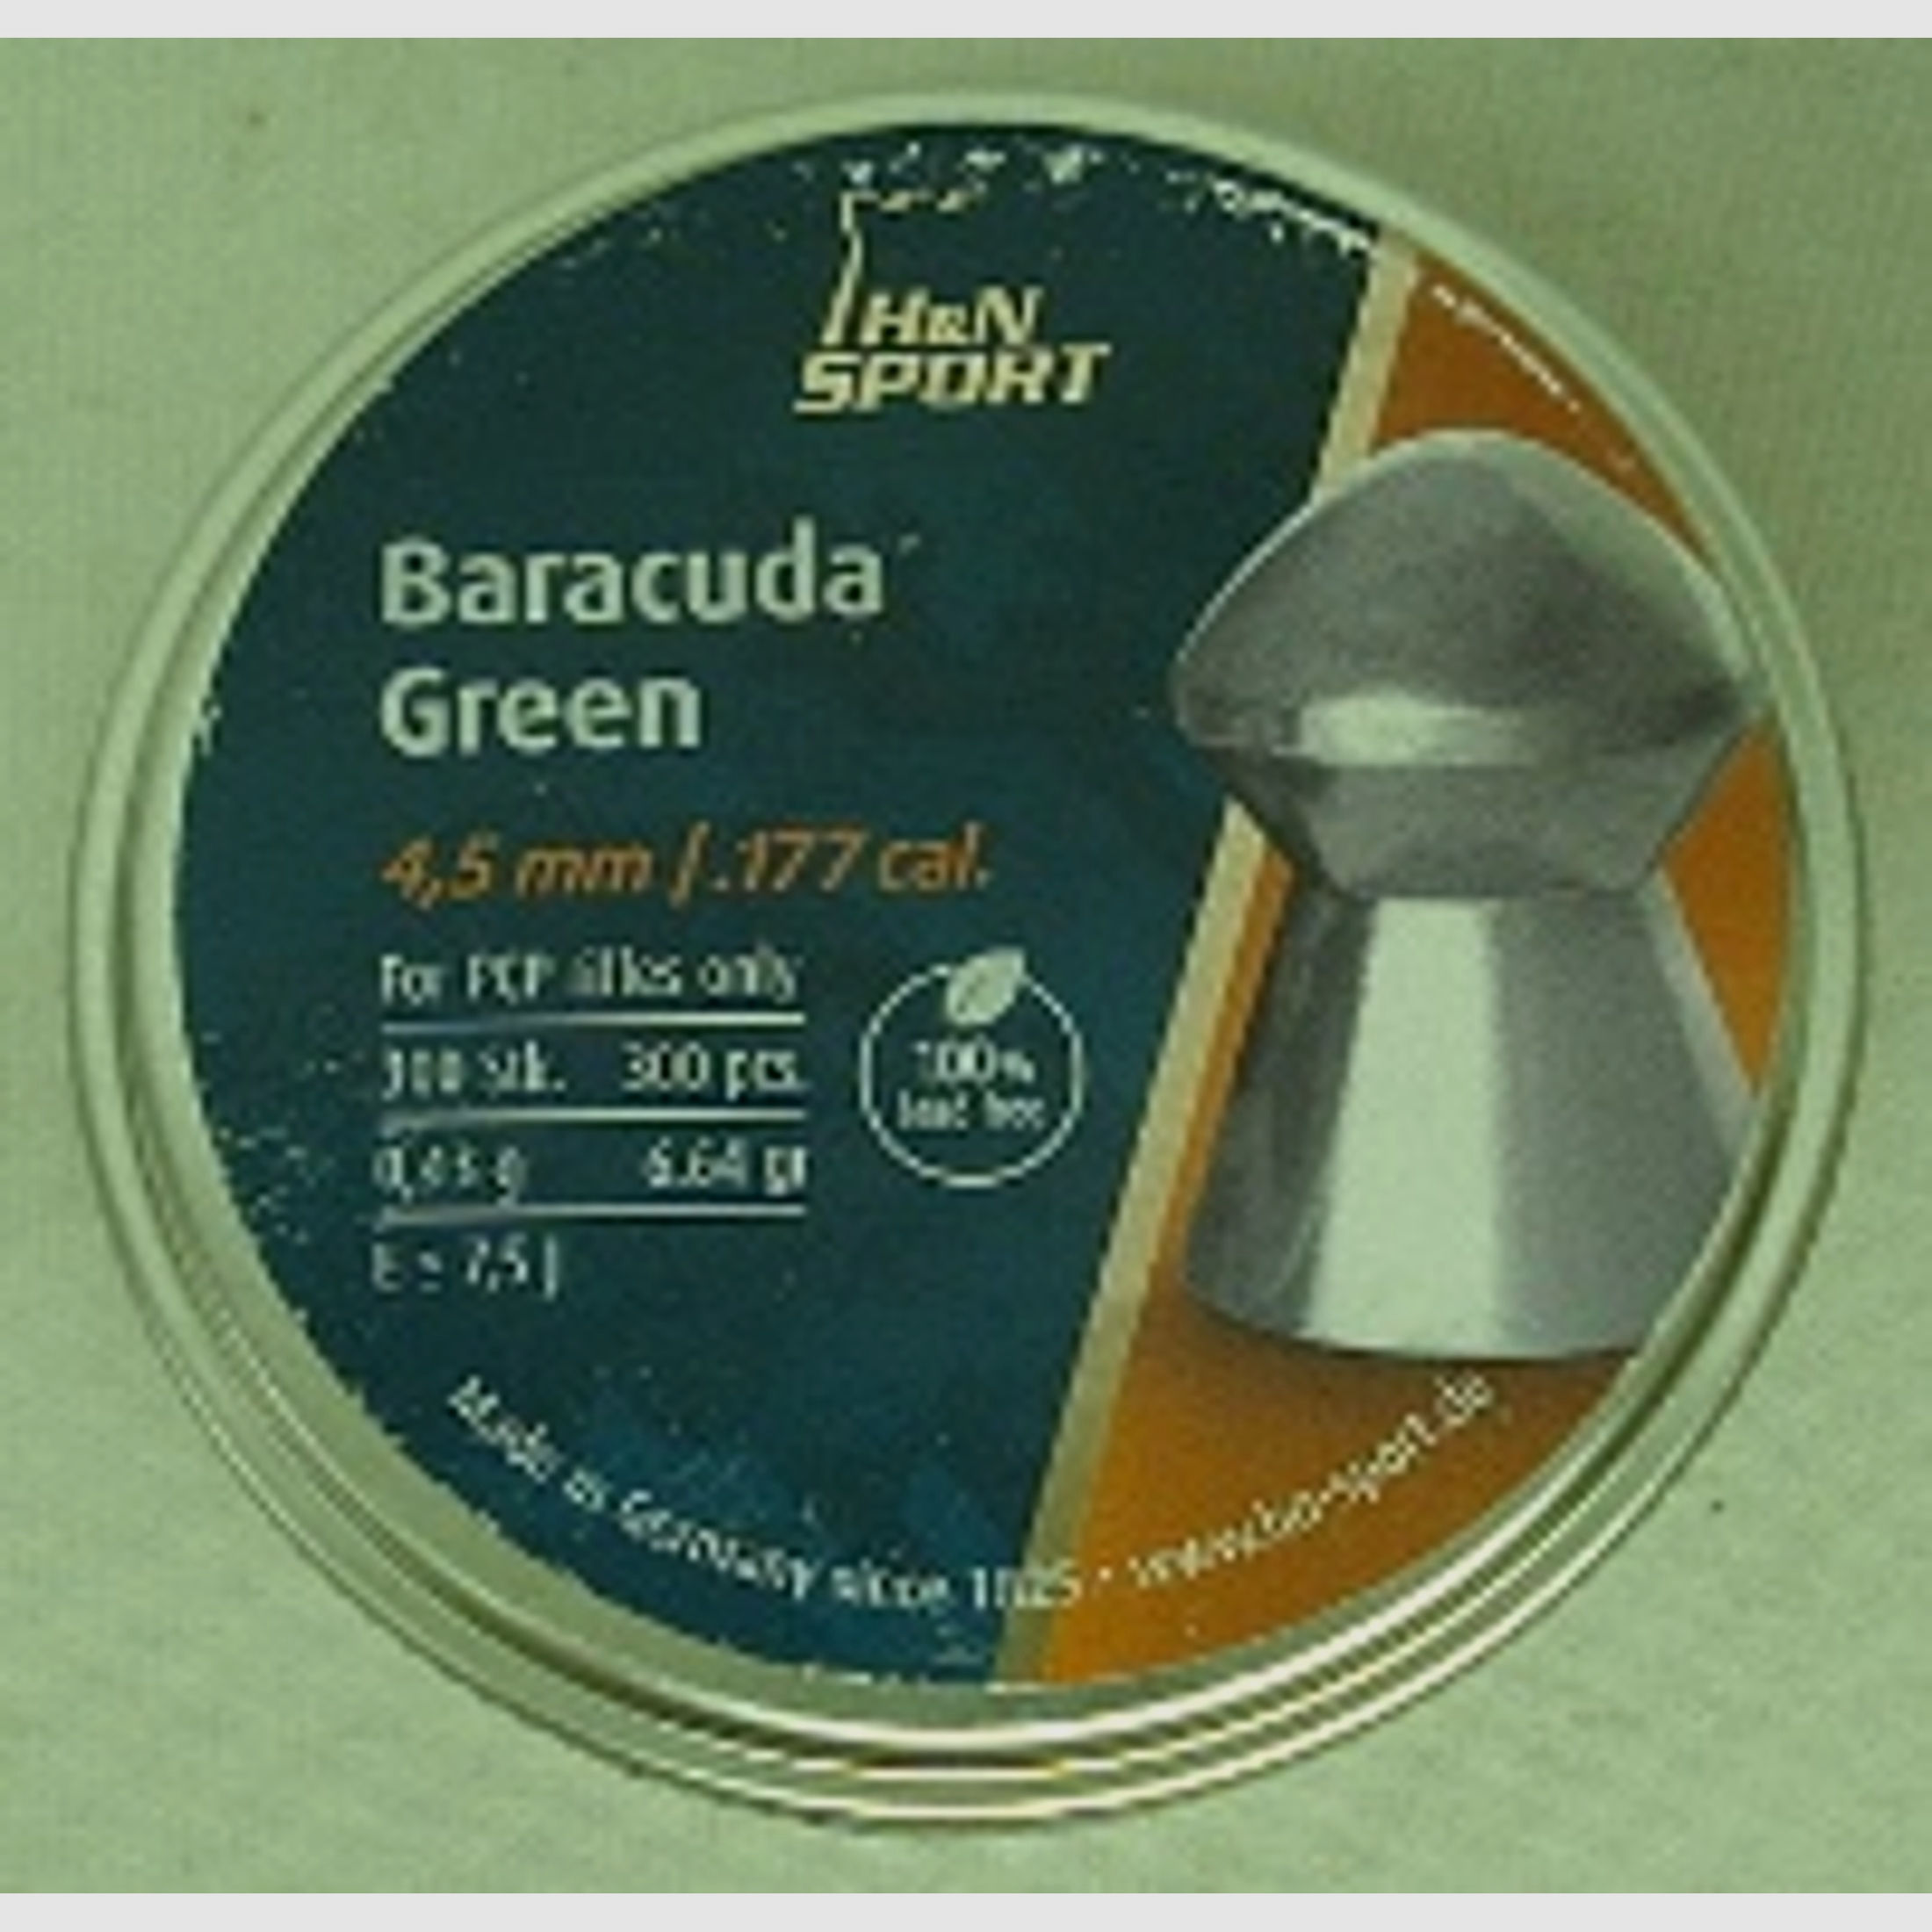 Baracuda Green - 4,50mm (a300) bleifrei